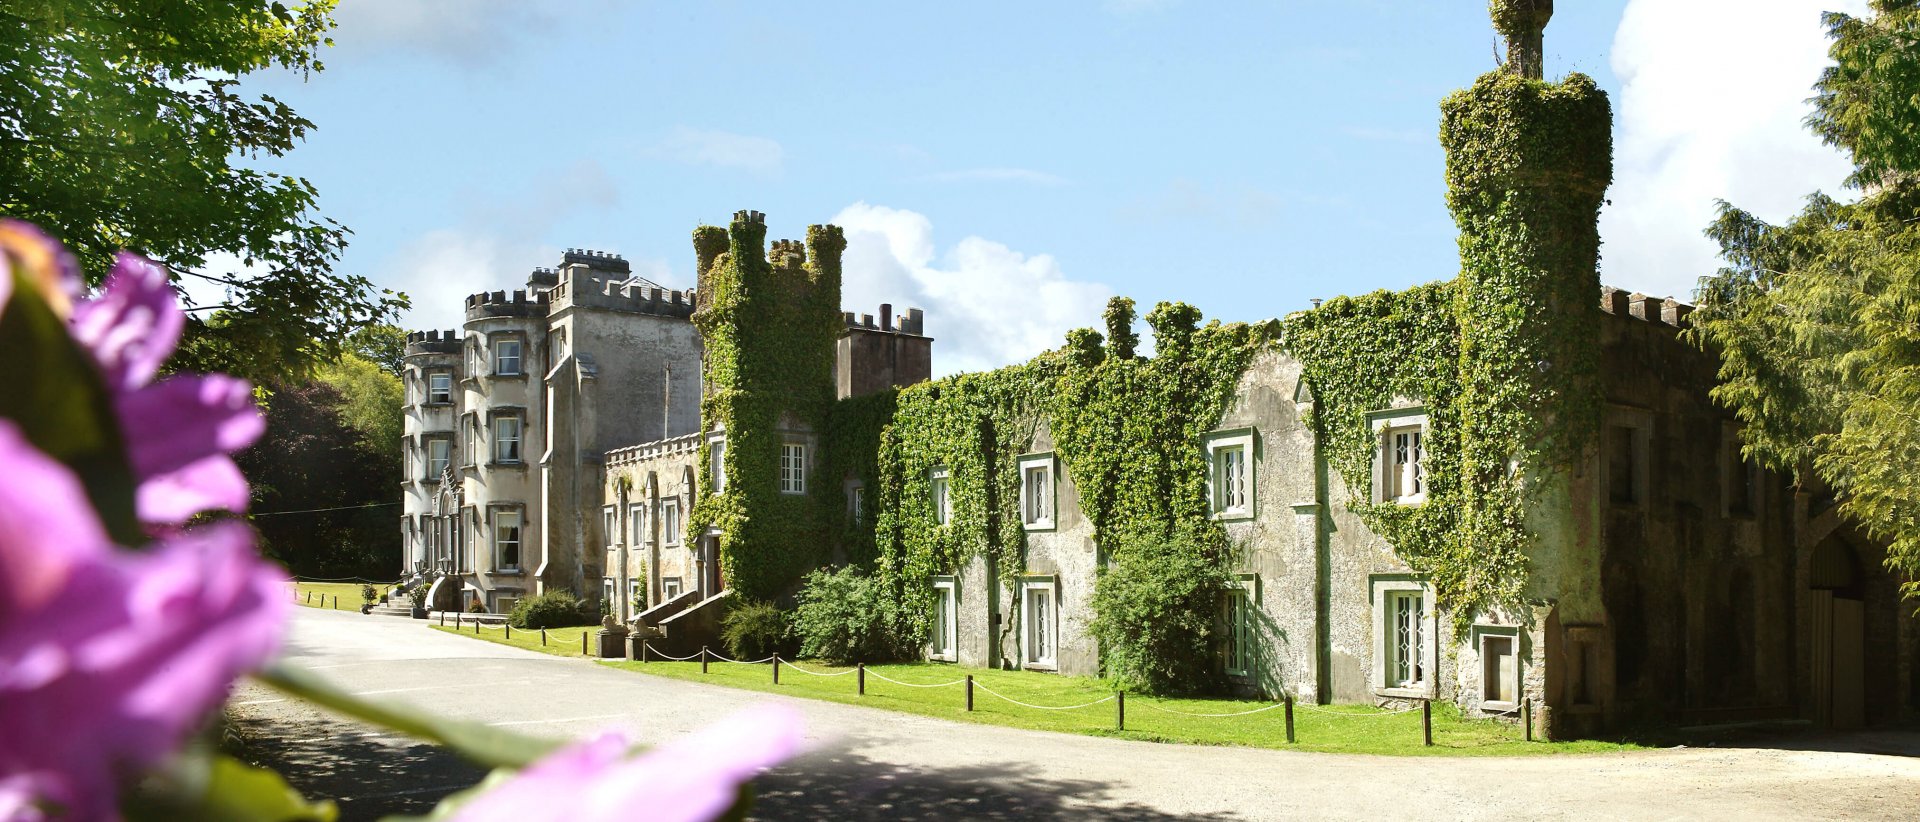 Exterior of Ballyseede Castle Hotel in Ireland